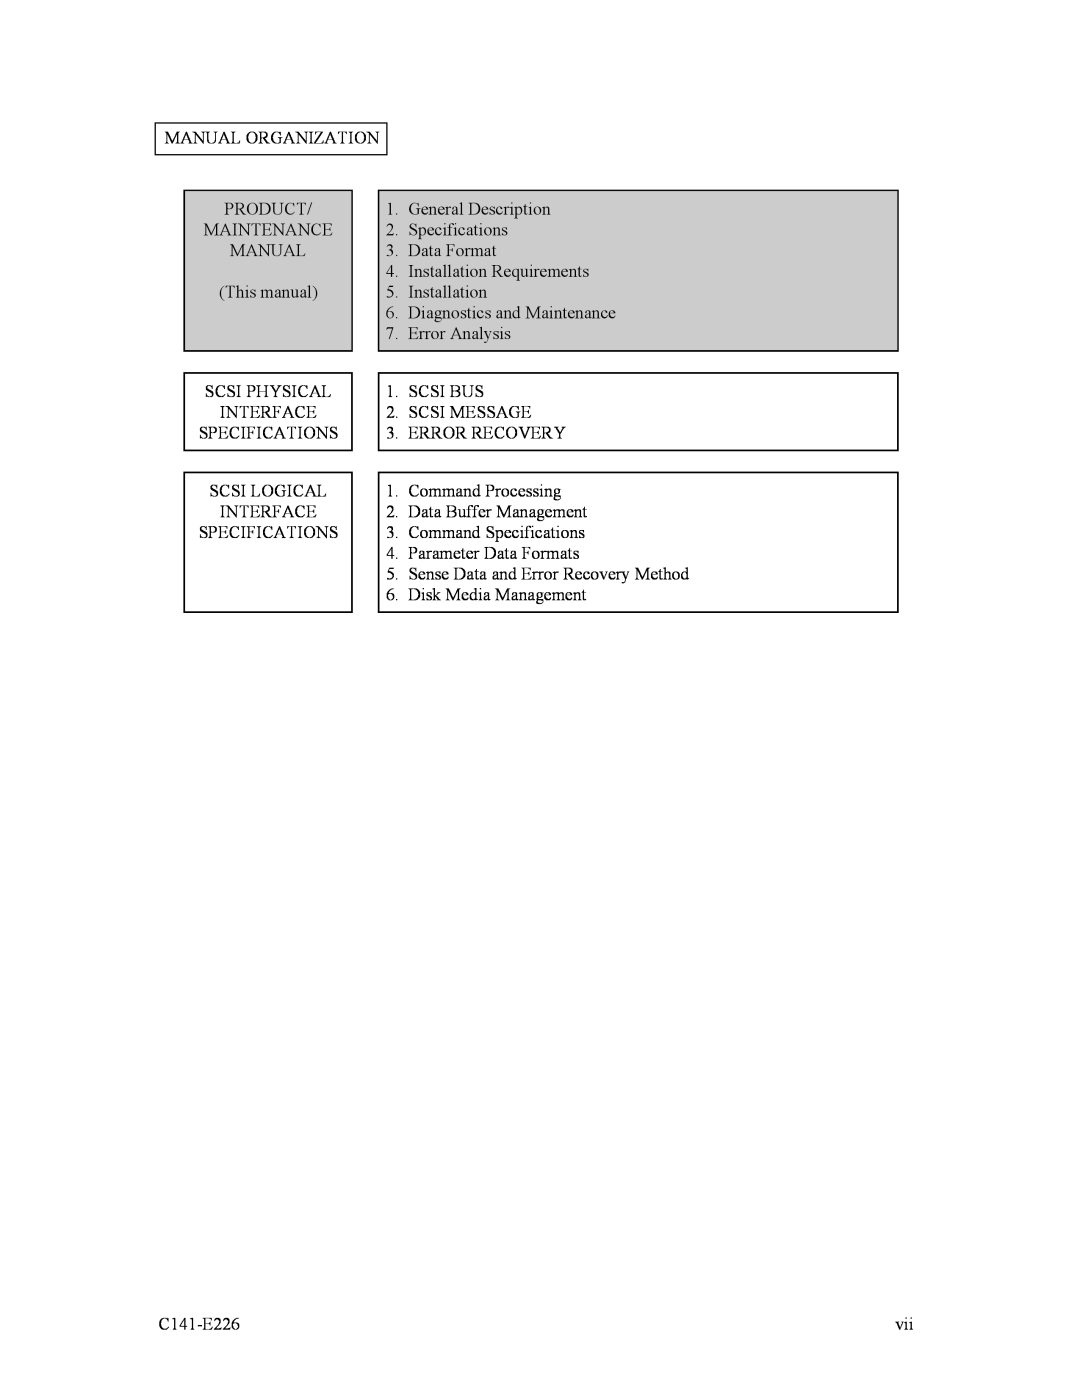 Fujitsu MAW3300NC/NP Manual Organization, Product, General Description, Maintenance, Specifications, Data Format, Scsi Bus 